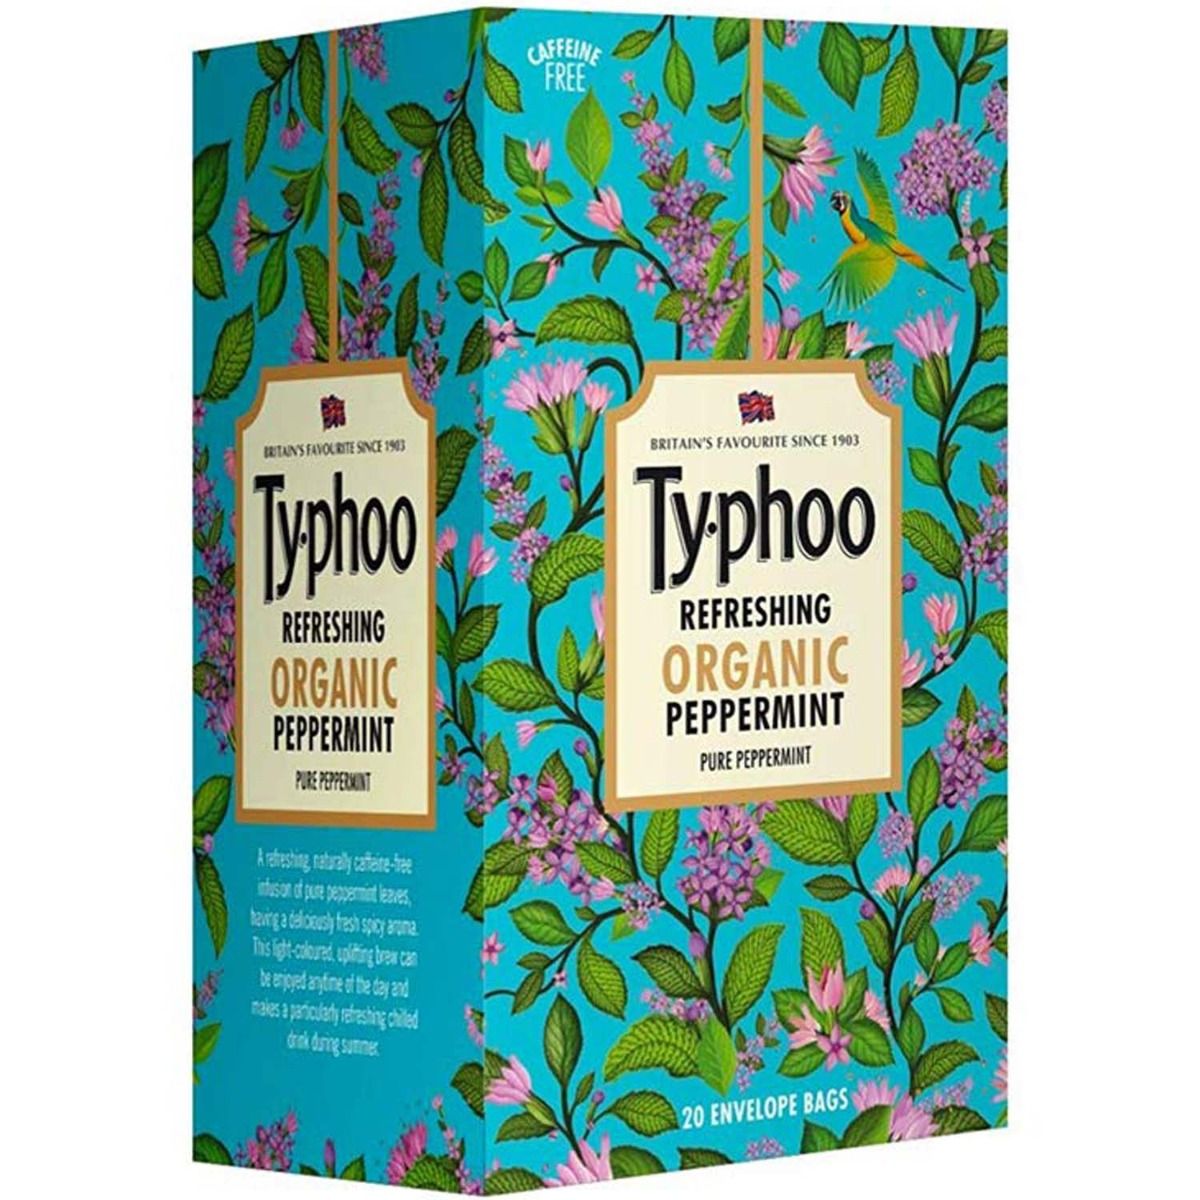 Buy Ty.Phoo Refreshing Organic Peppermint Tea Bags, 20 Count Online